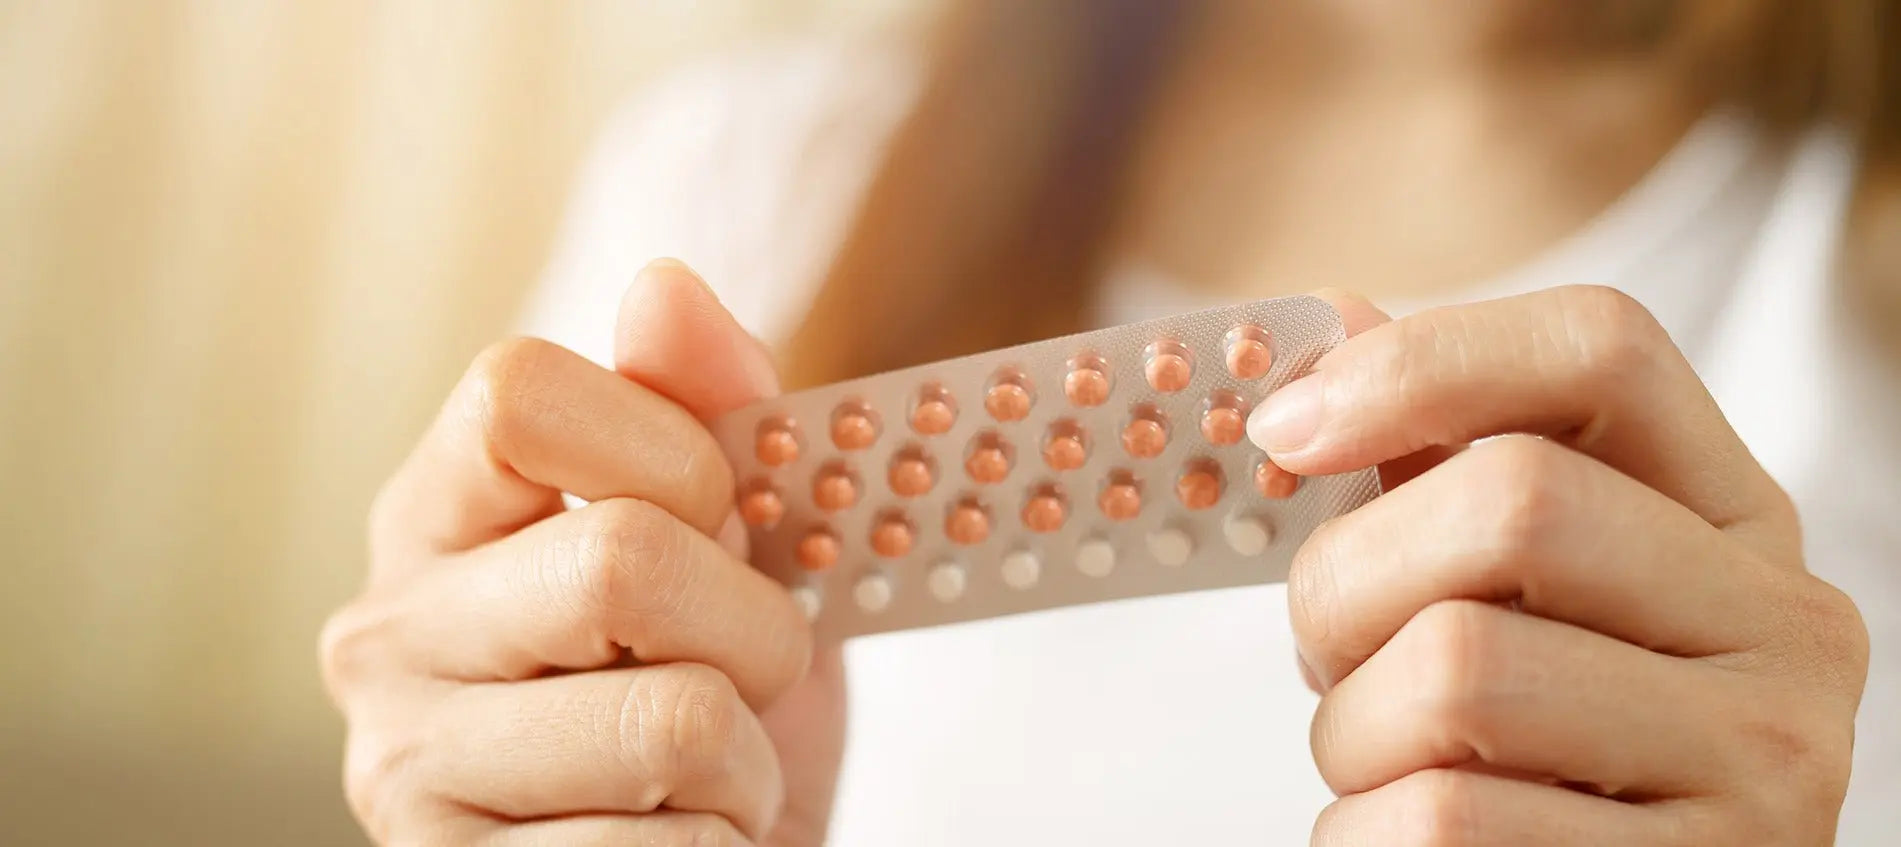 Bien choisir son mode de contraception - Ma Culotte Menstruelle